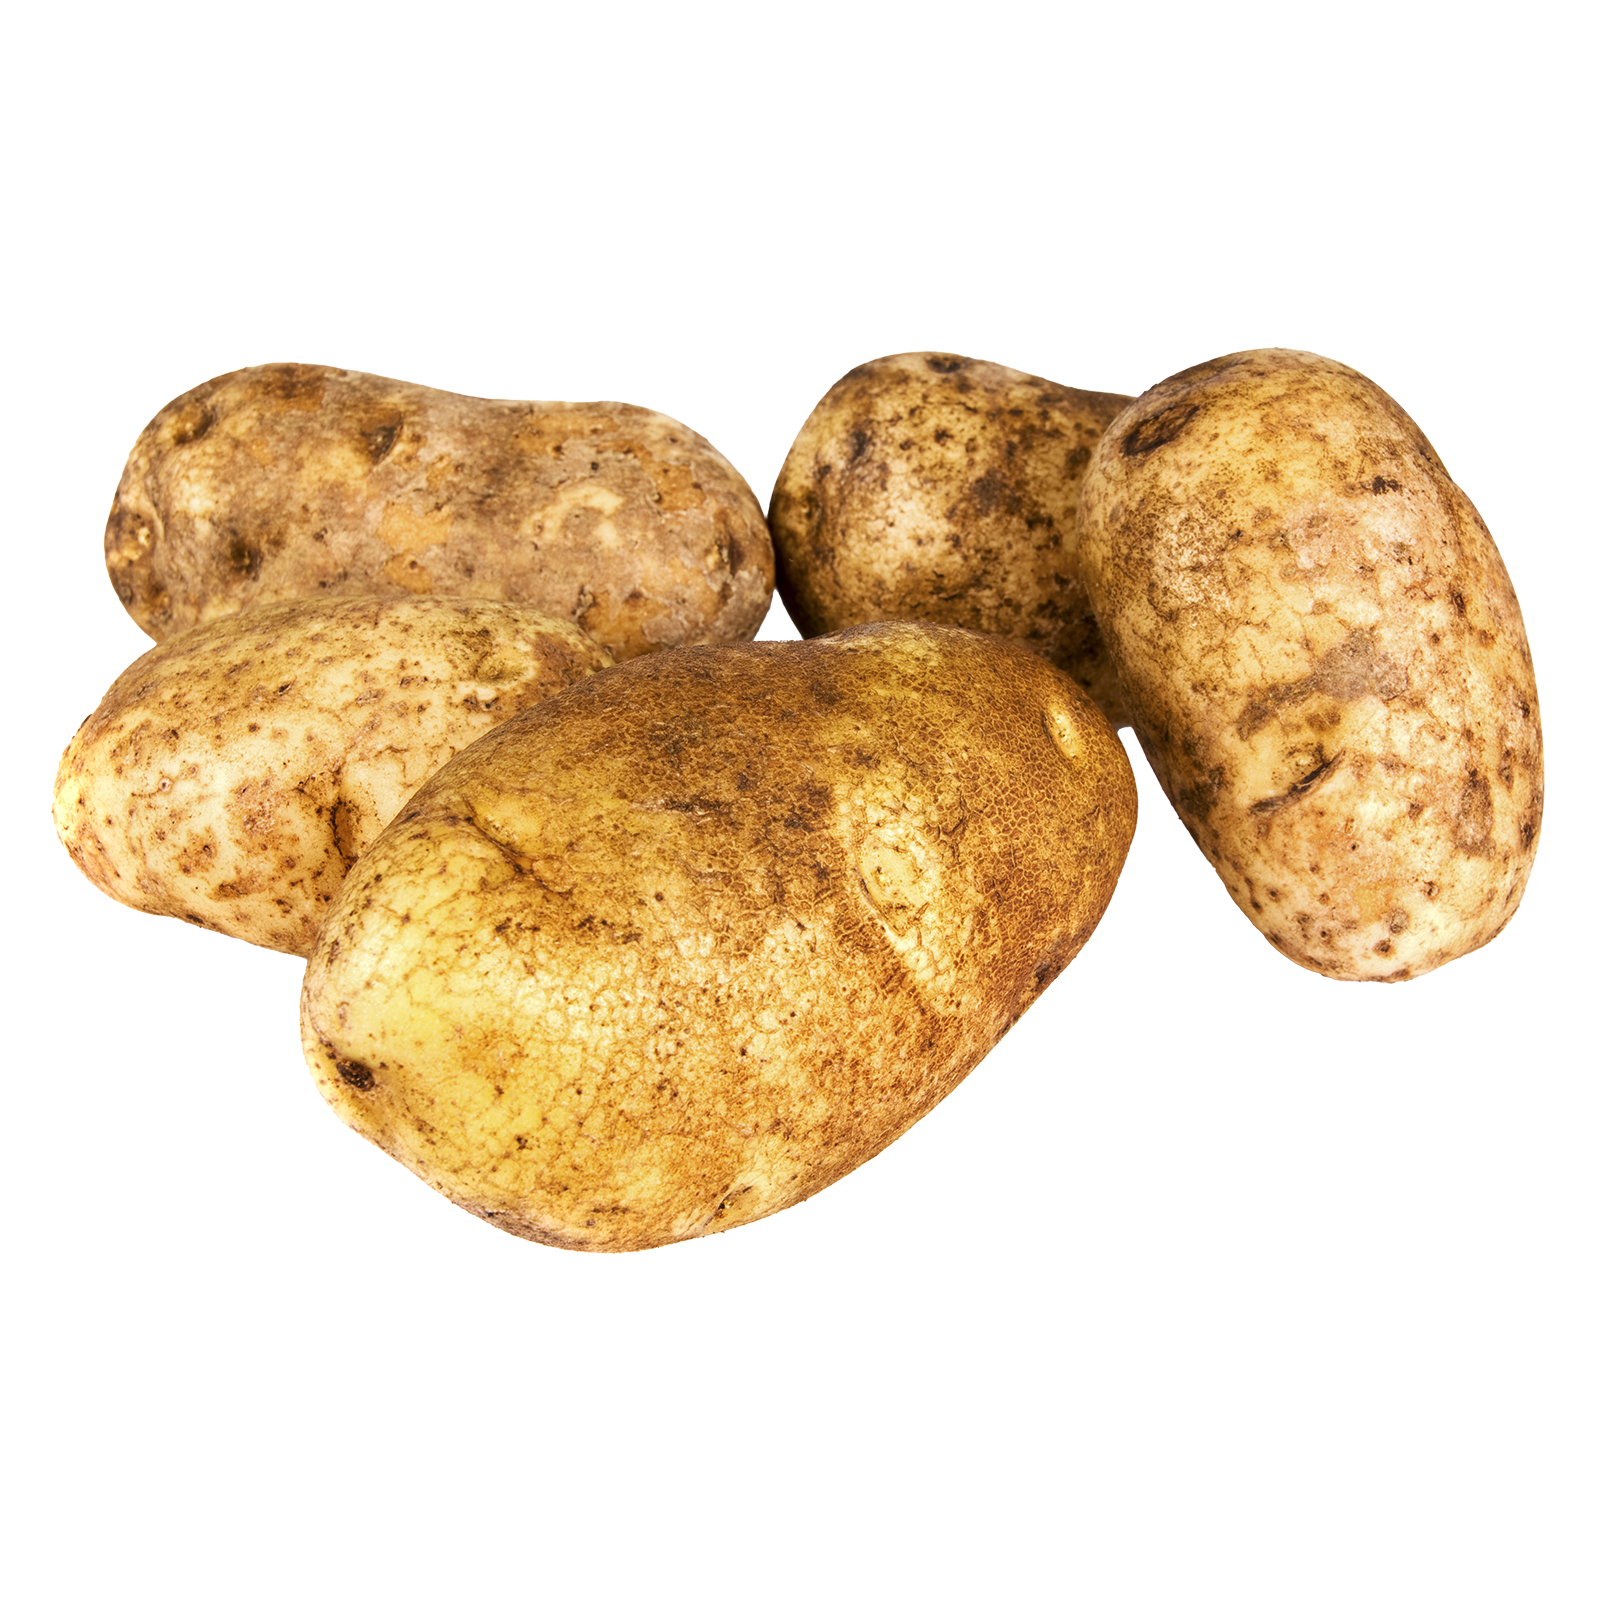 Russet Potatoes - 5ct